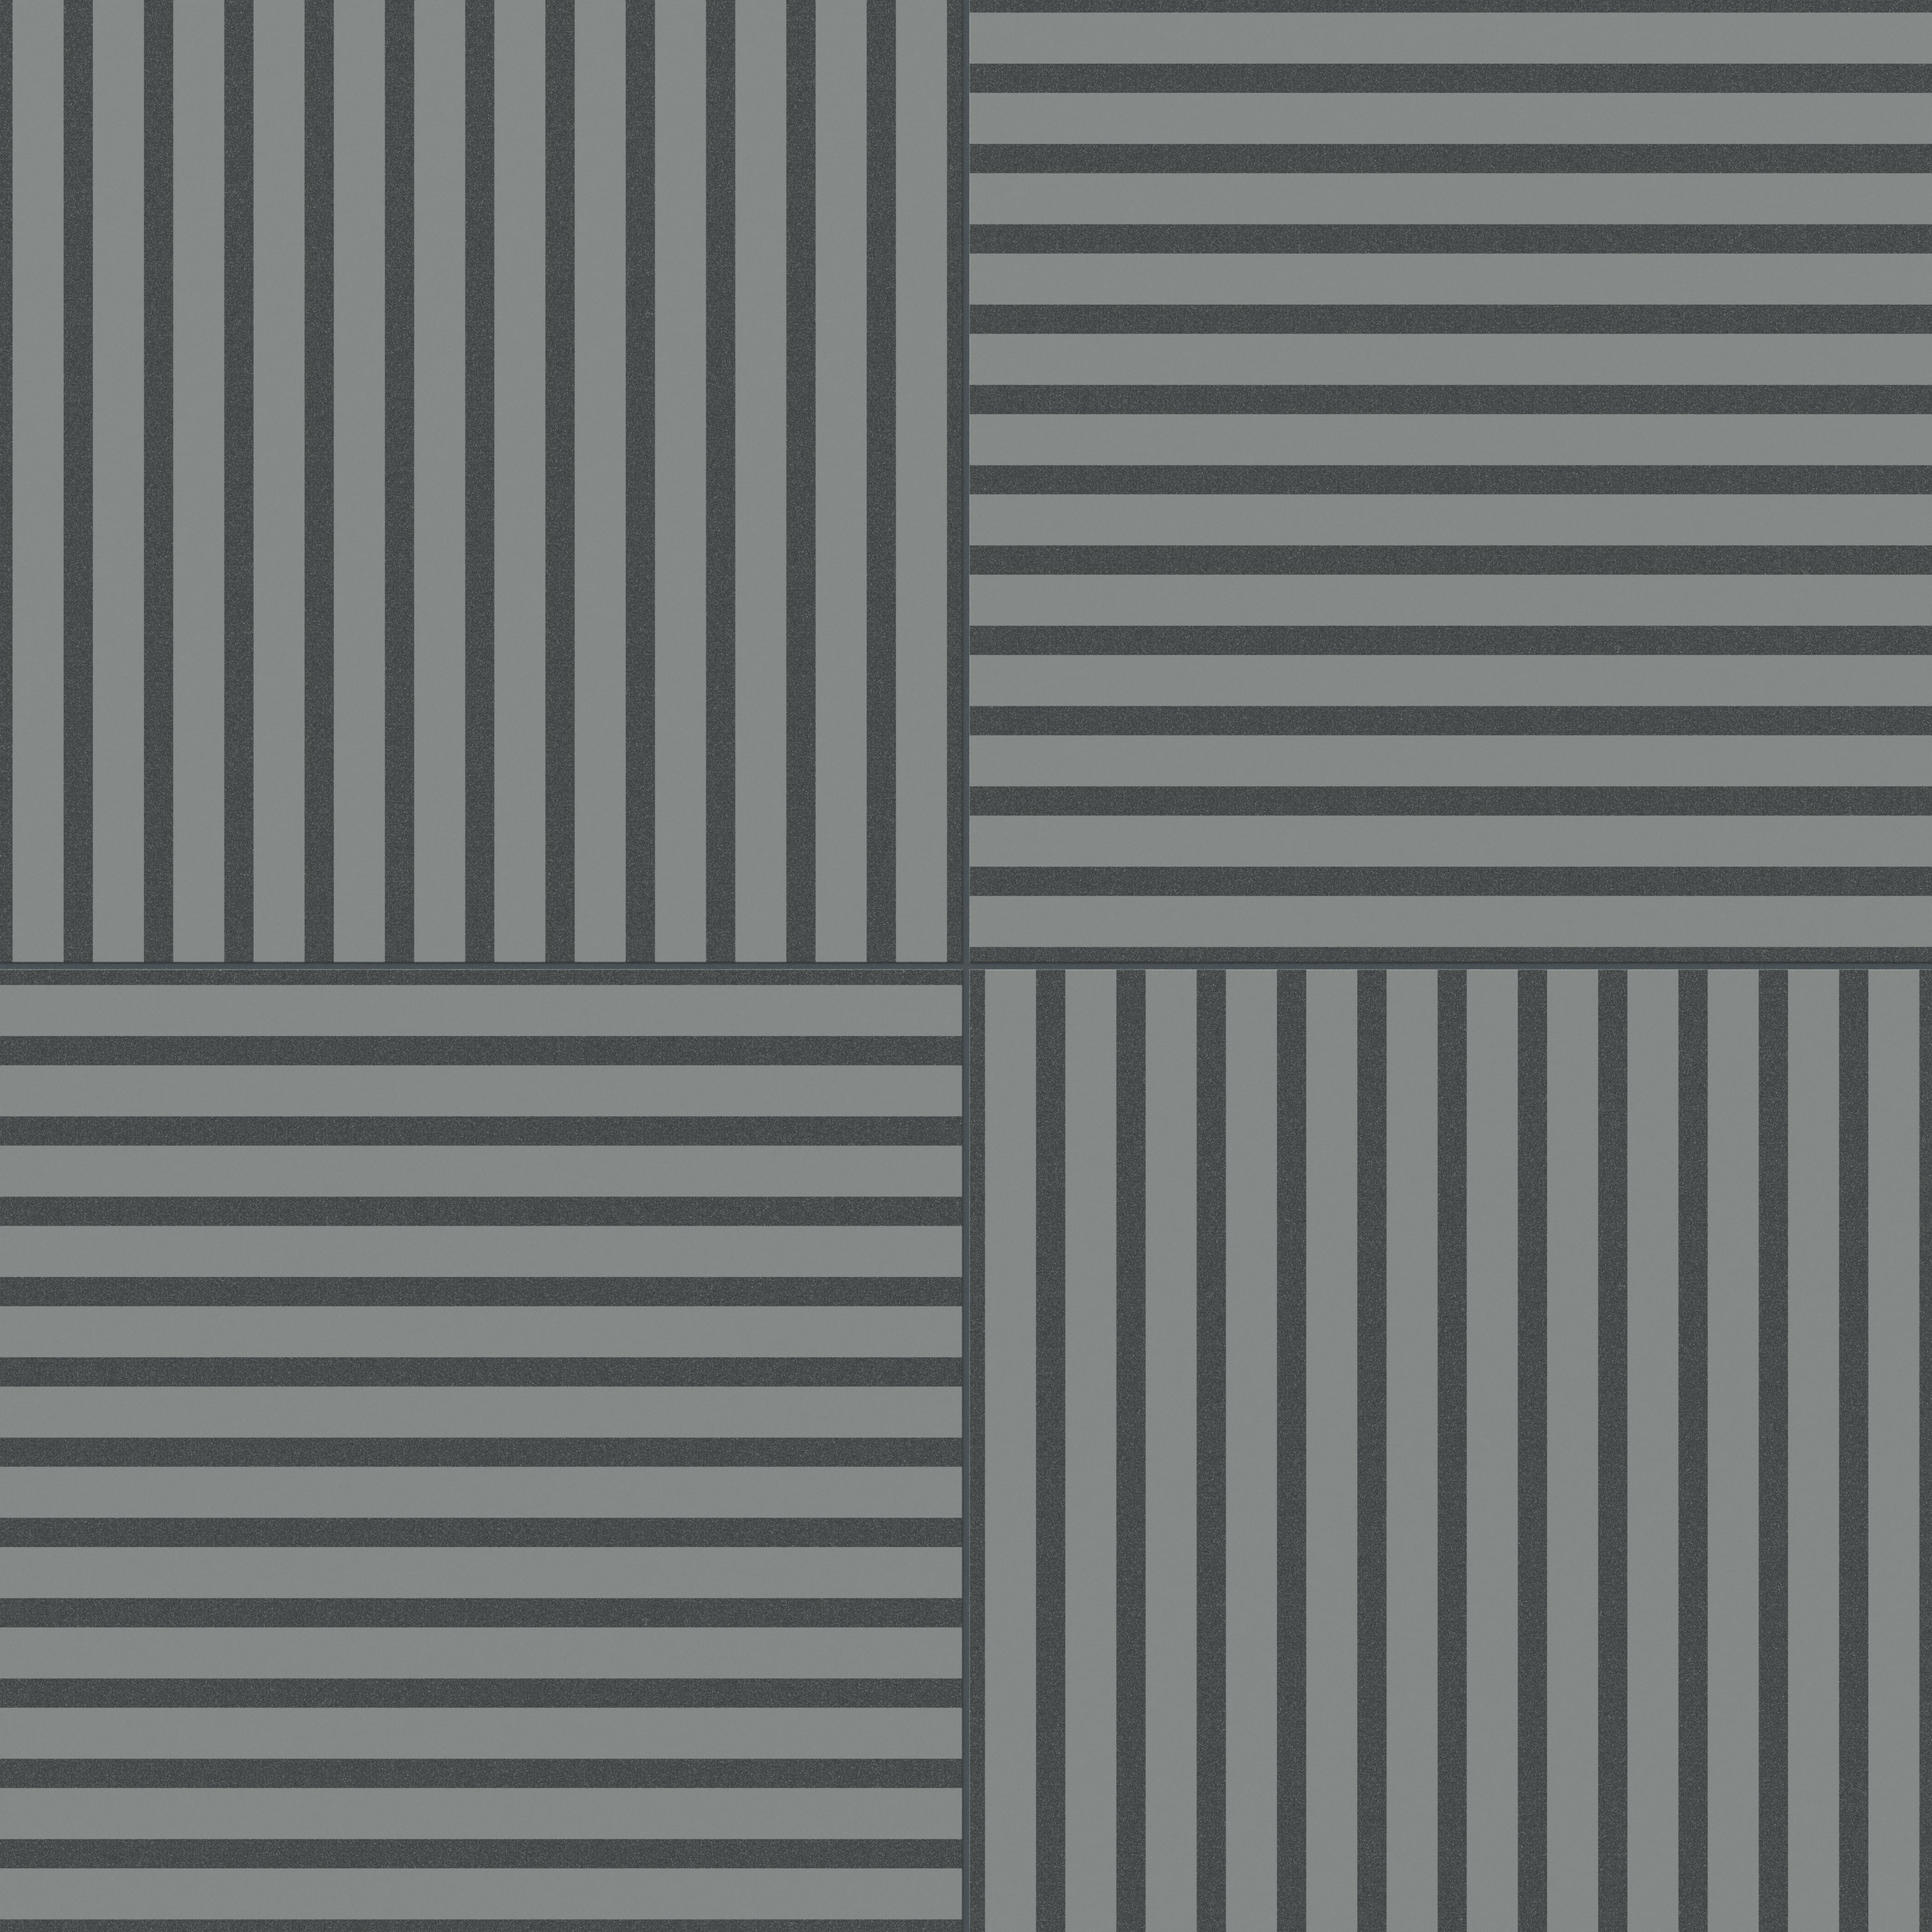 Riley 24x24 Matte Porcelain Tile in Striped Pattern Indigo